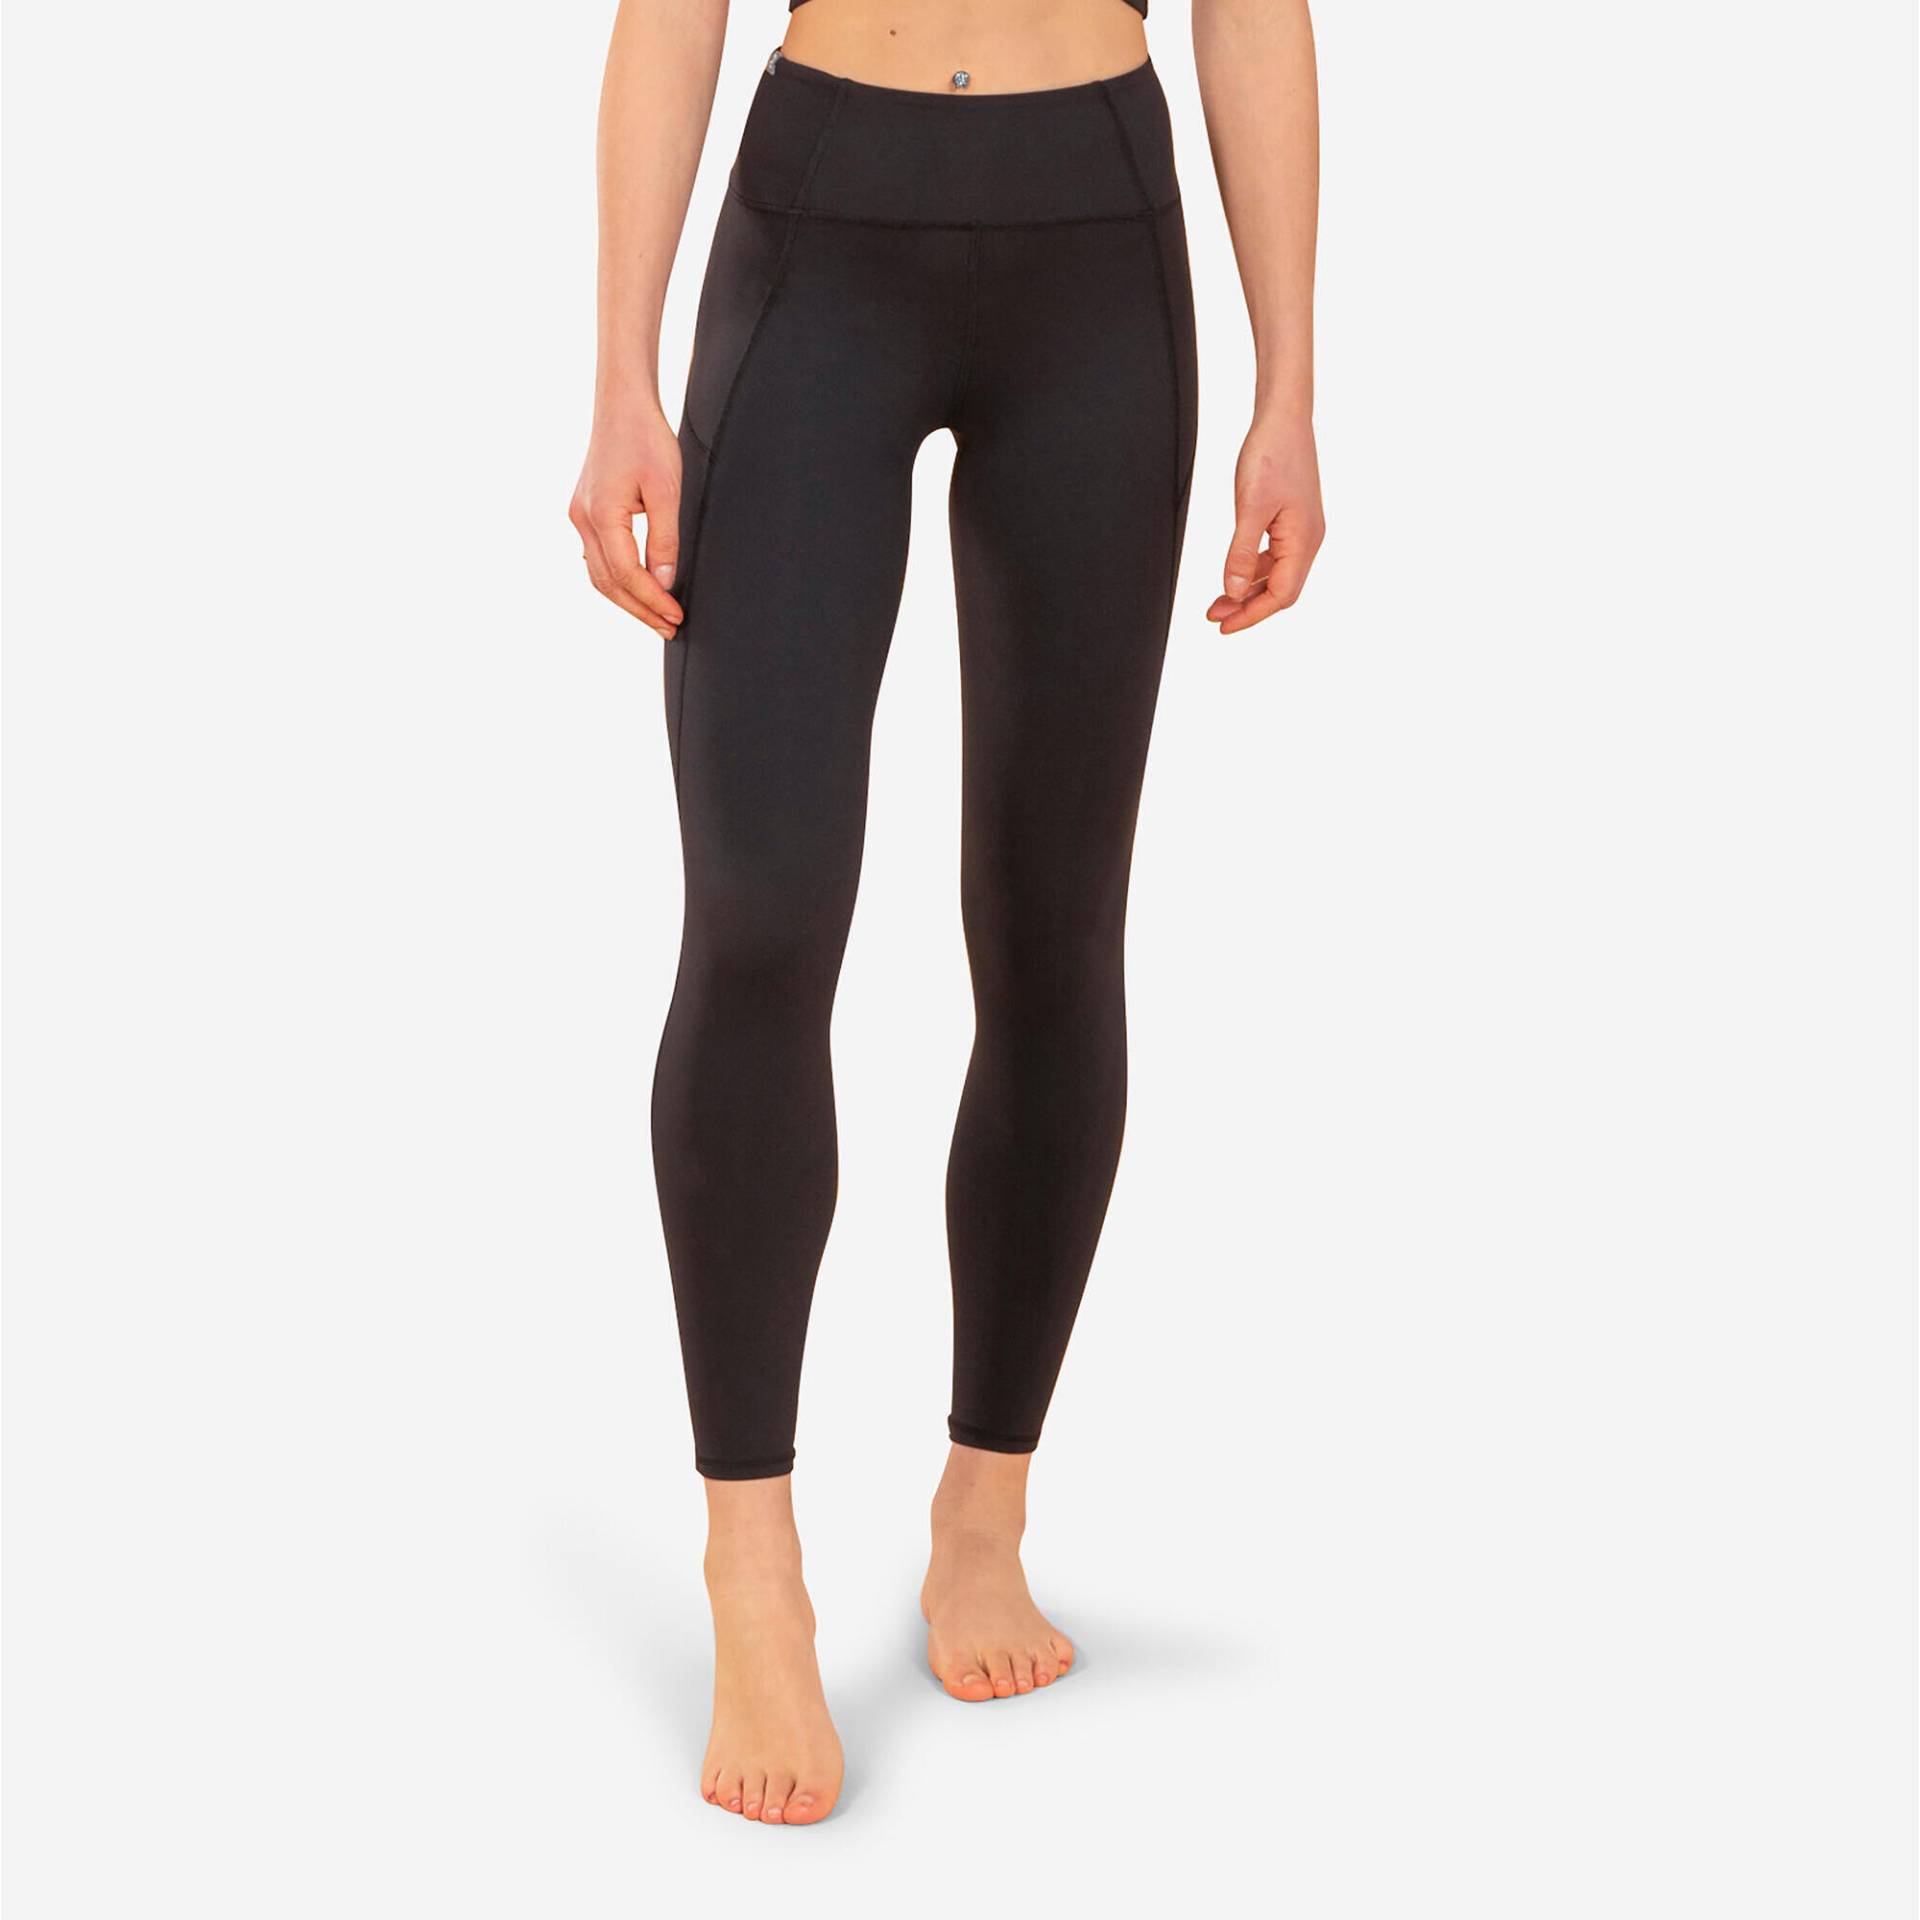 Yoga Leggings Damen - Premium schwarz von KIMJALY